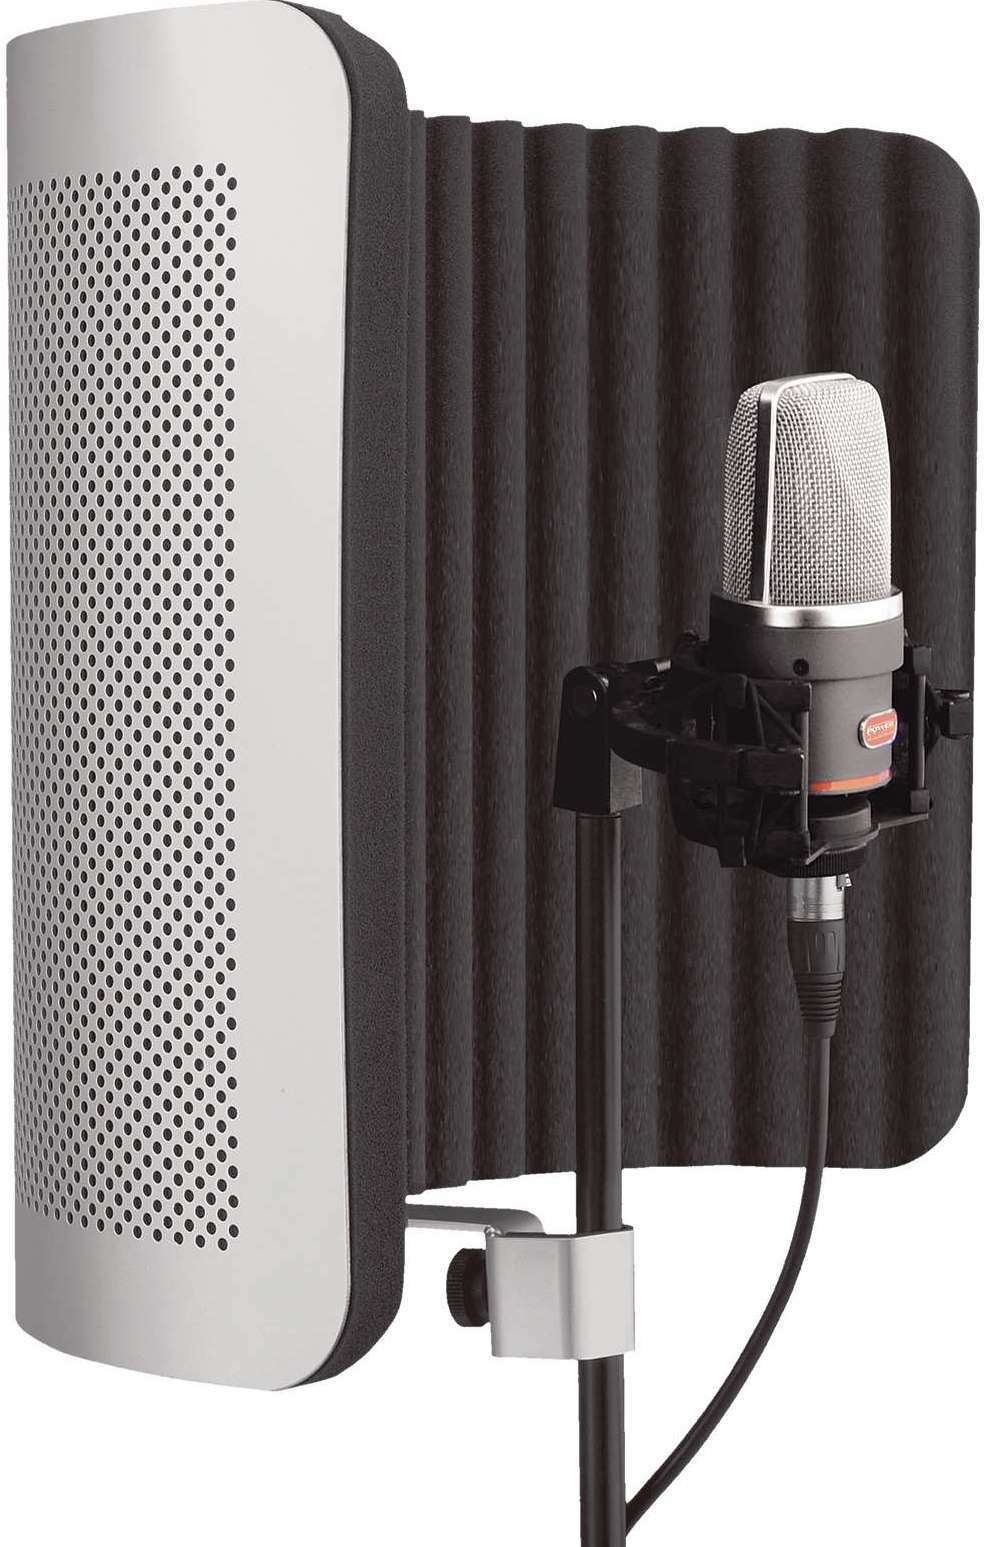 Power Studio Pf 46 - Pop filter & microphone screen - Main picture